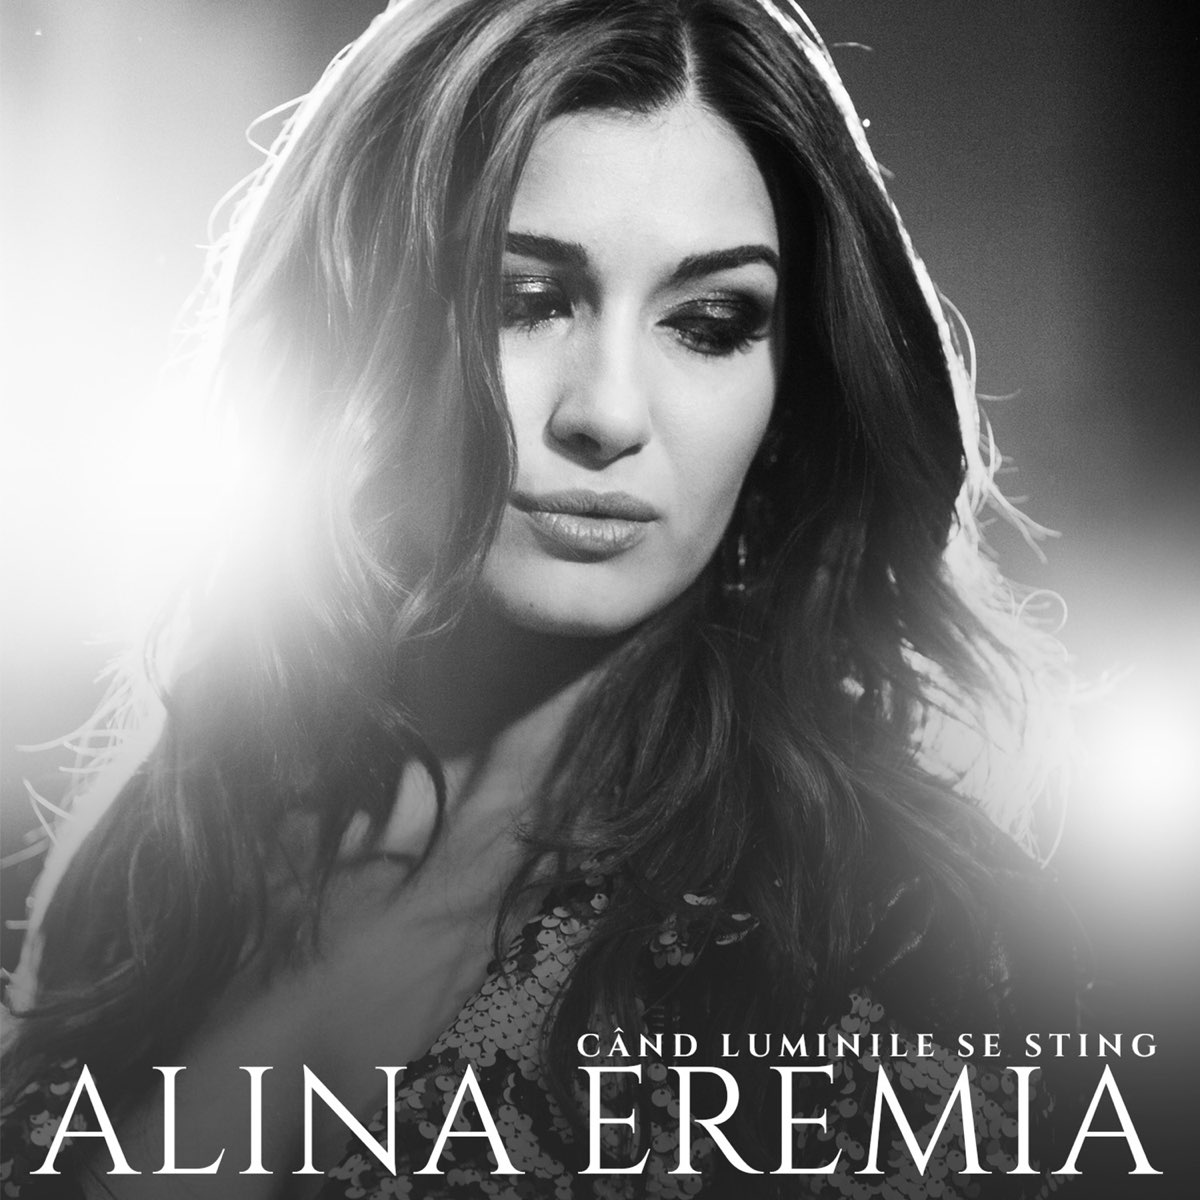 ‎Când luminile se sting - Single by Alina Eremia on Apple Music